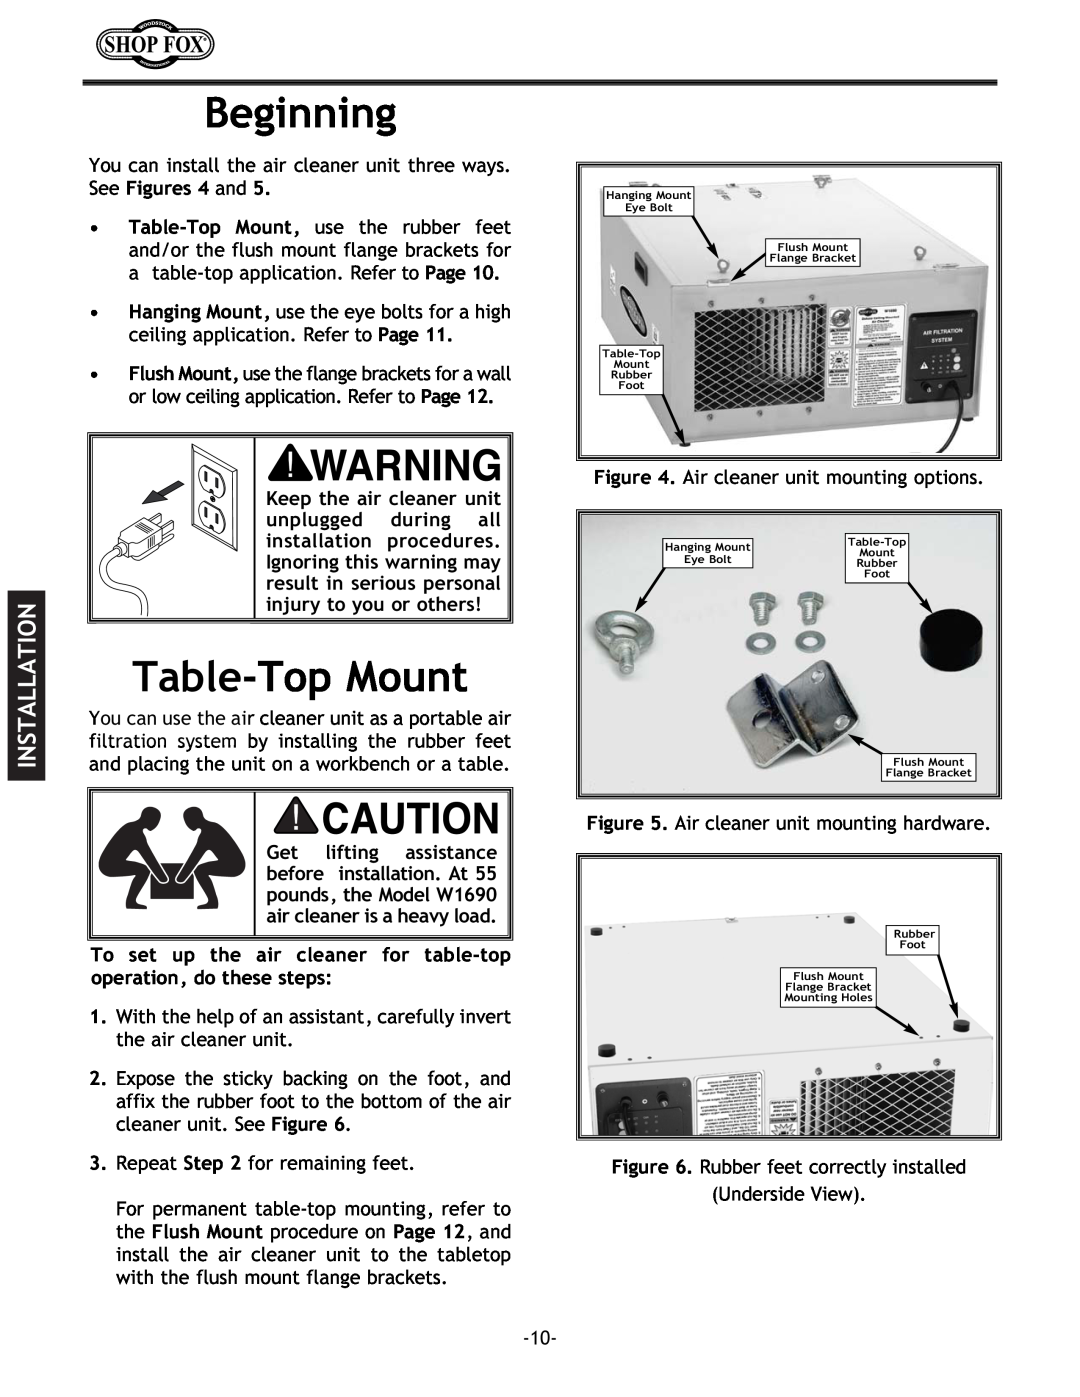 Woodstock W1690 instruction manual Beginning, Table-TopMount, Installation 